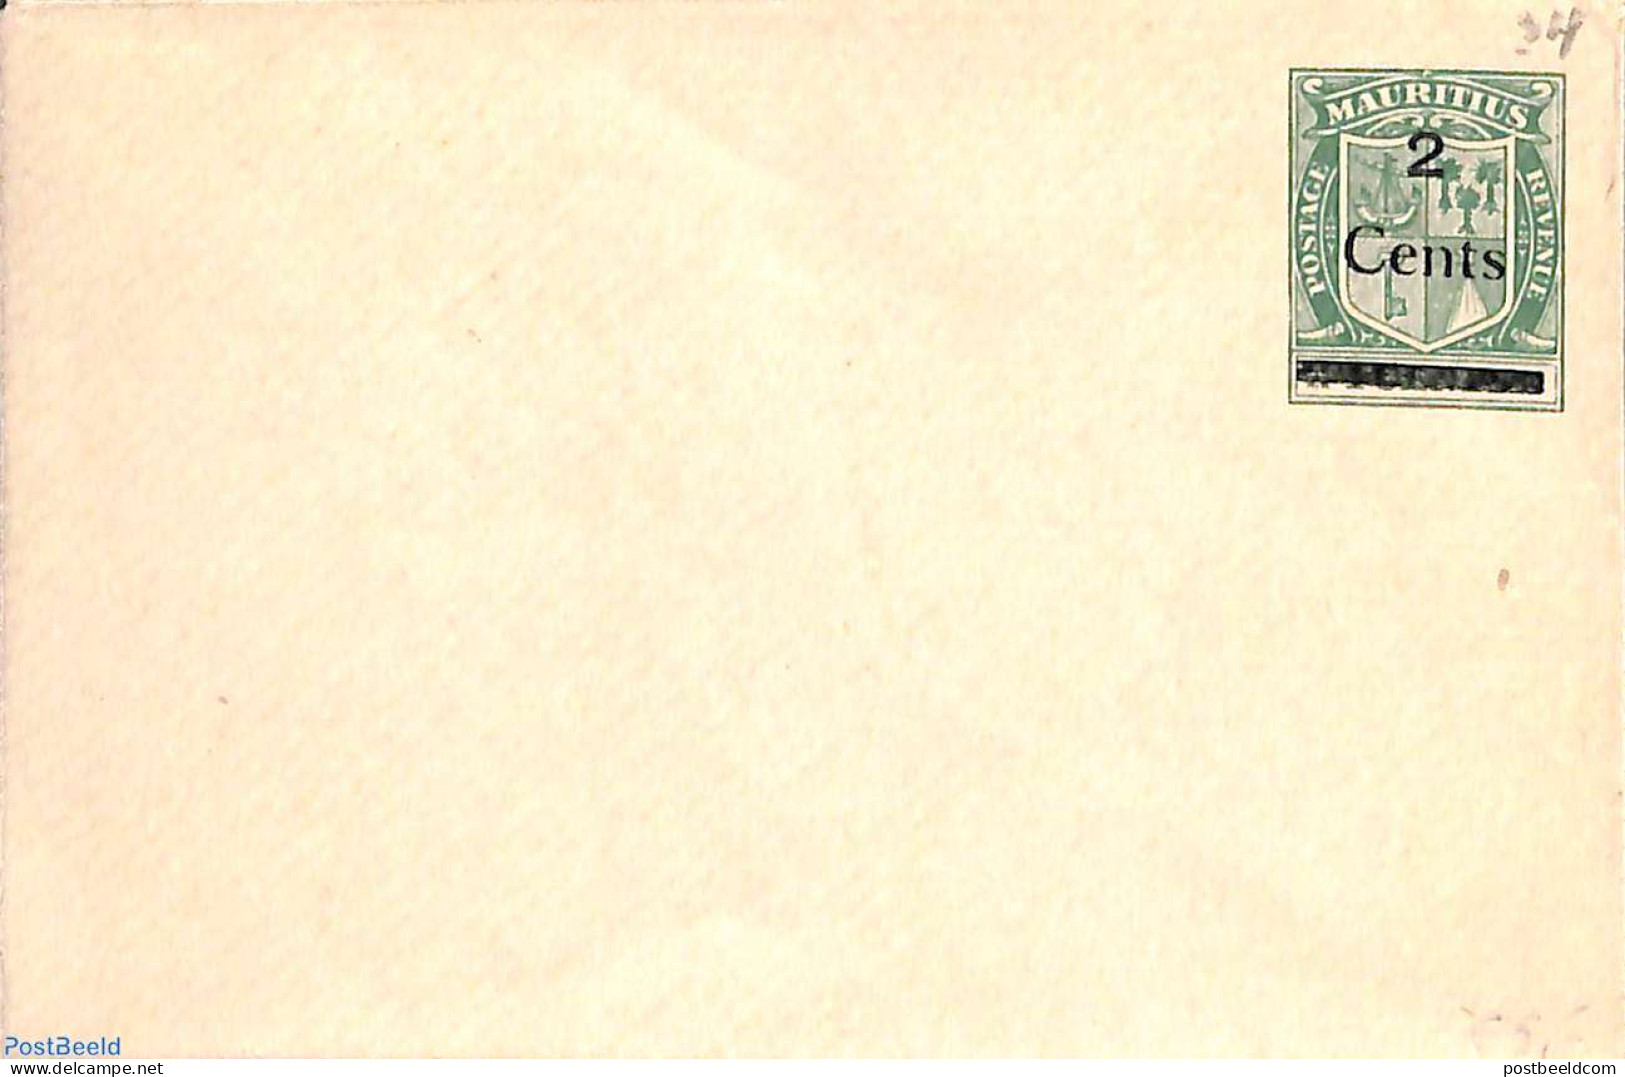 Mauritius 1924 Envelope 2 Cents On 4 Cents, Unused Postal Stationary - Mauritius (1968-...)